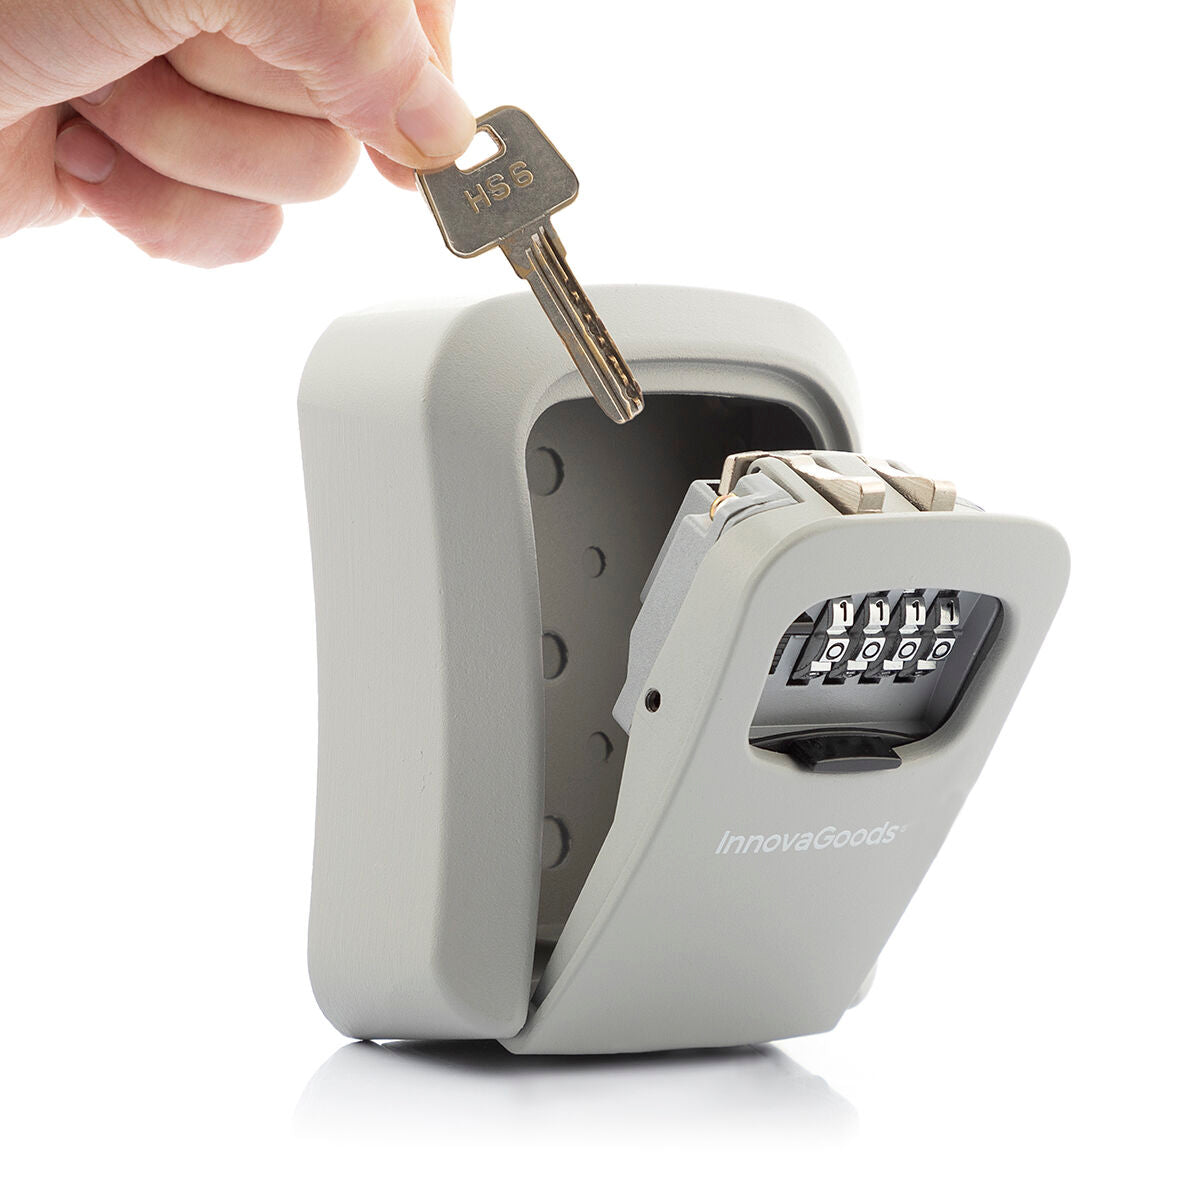 Safety Deposit Box for Keys LorK InnovaGoods